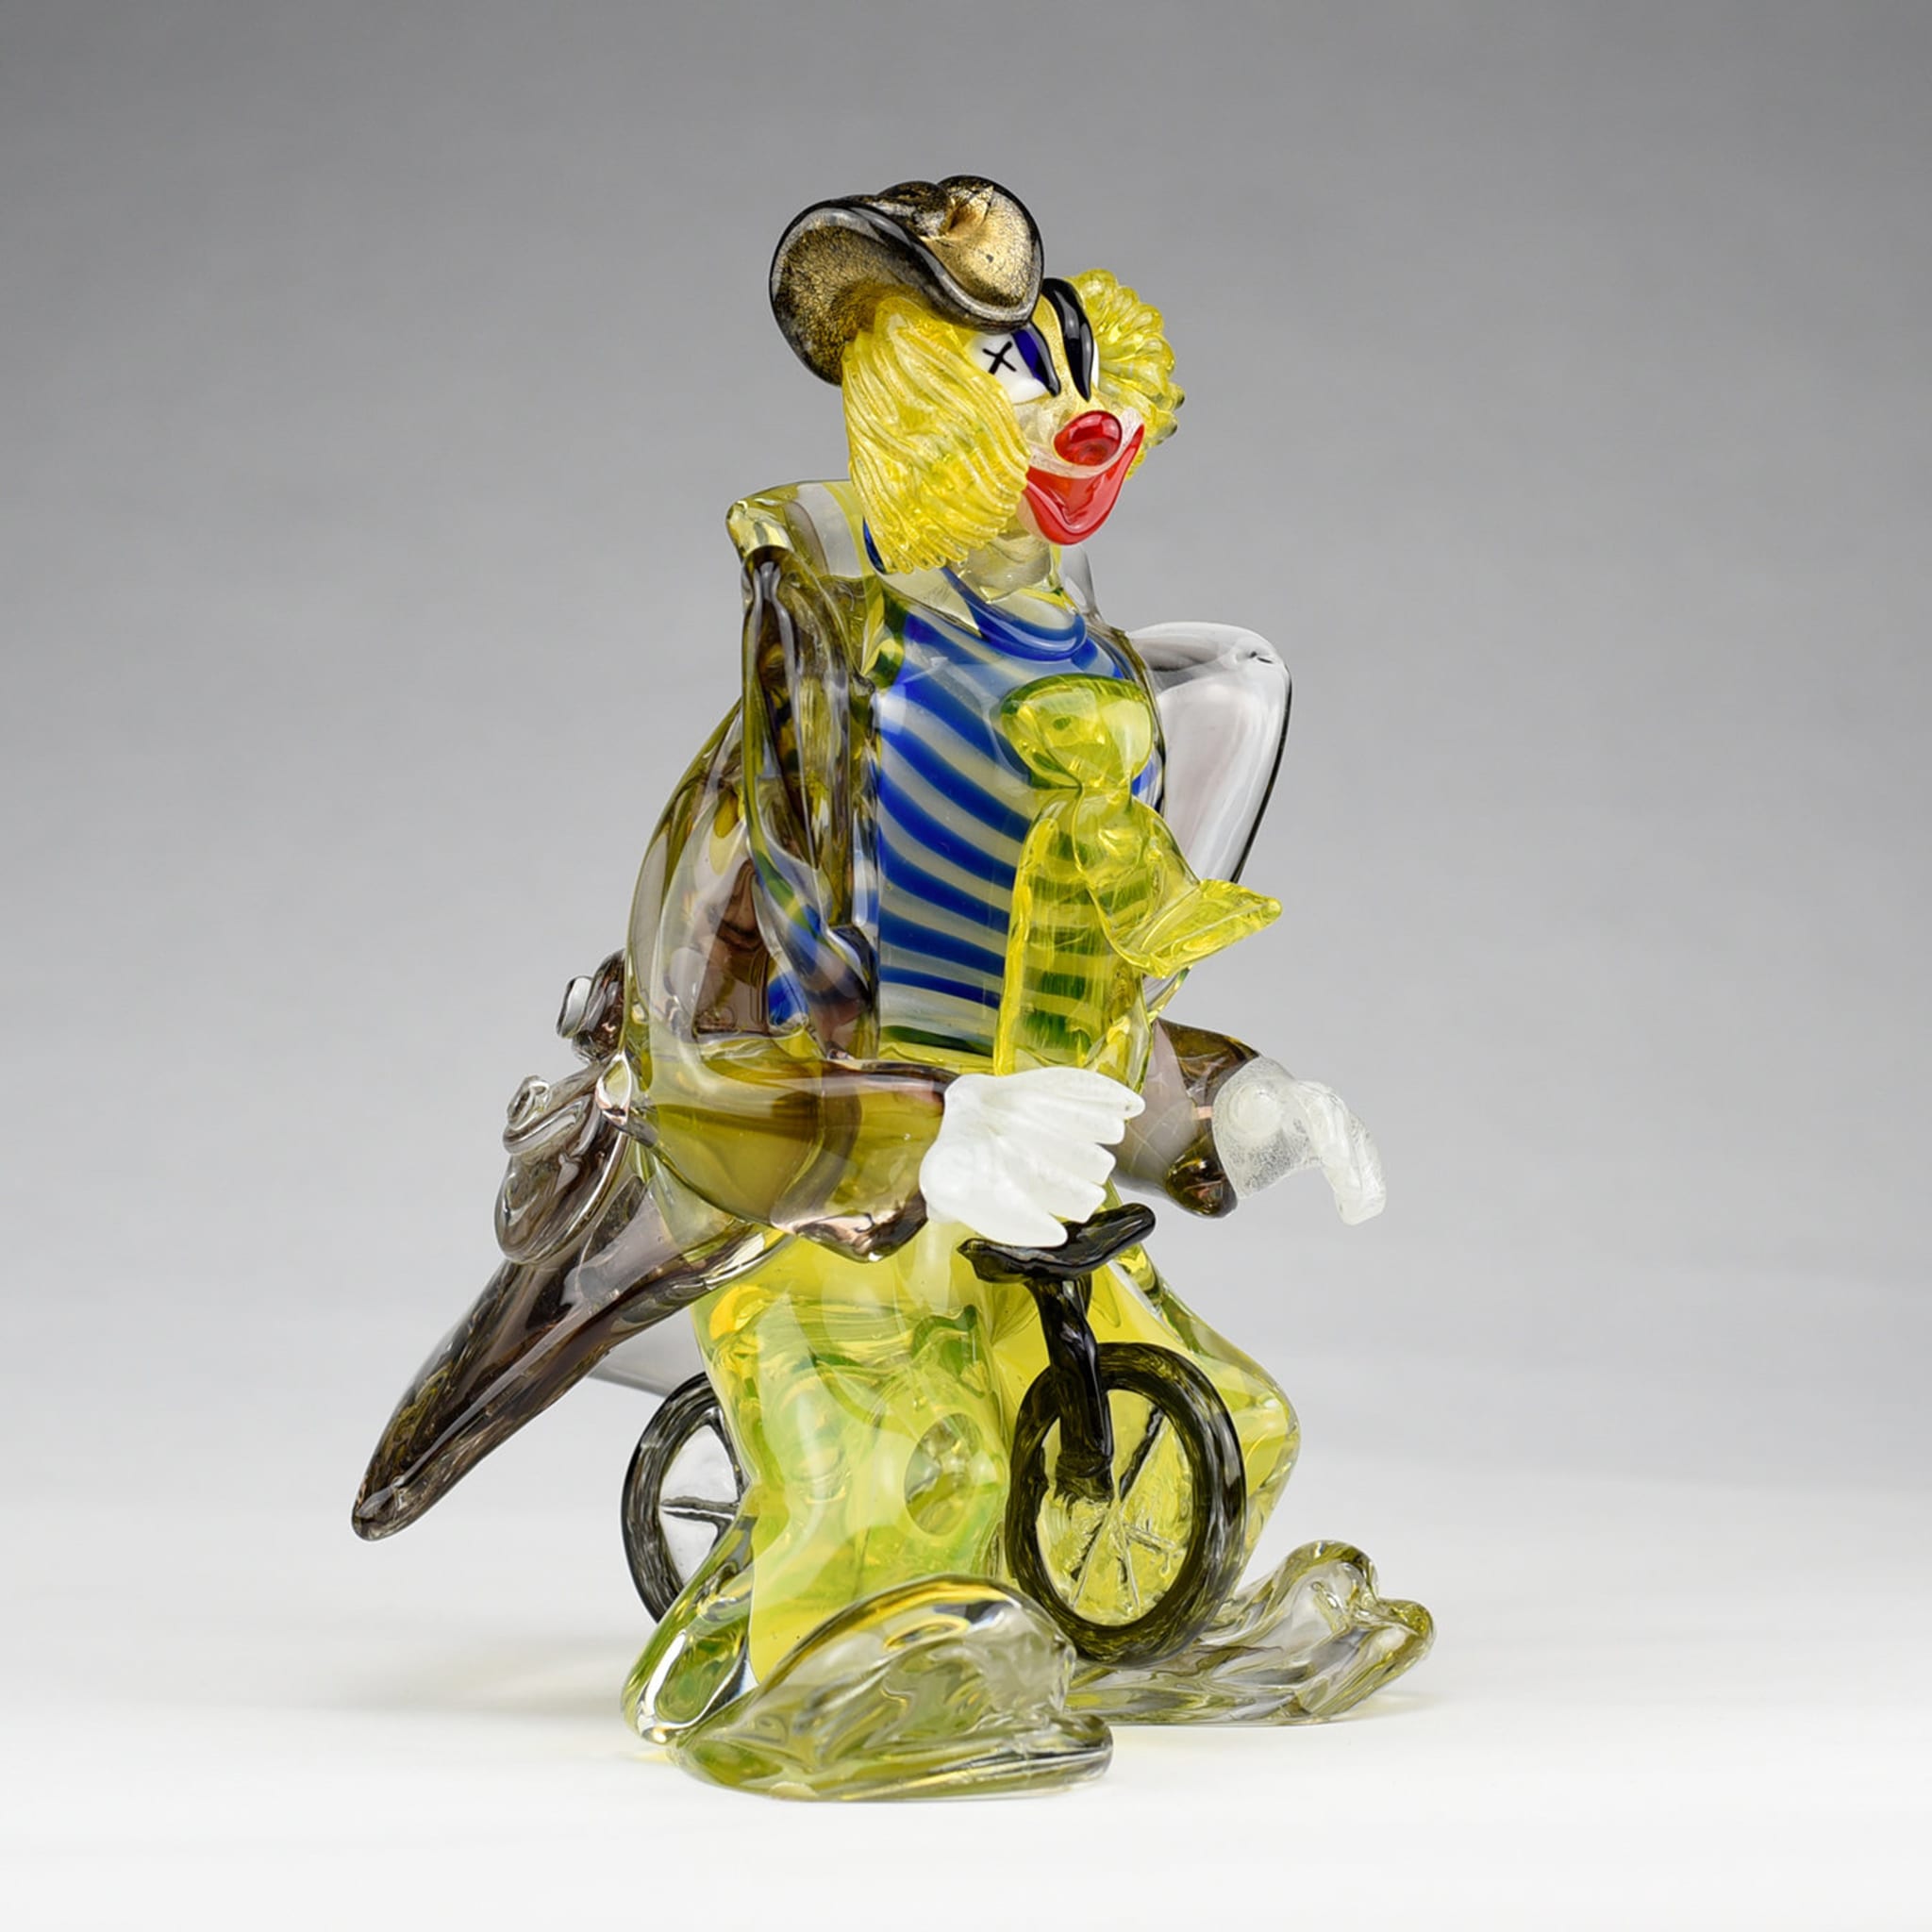 Clown Con Bicicletta Sculpture en verre polychrome - Vue alternative 2